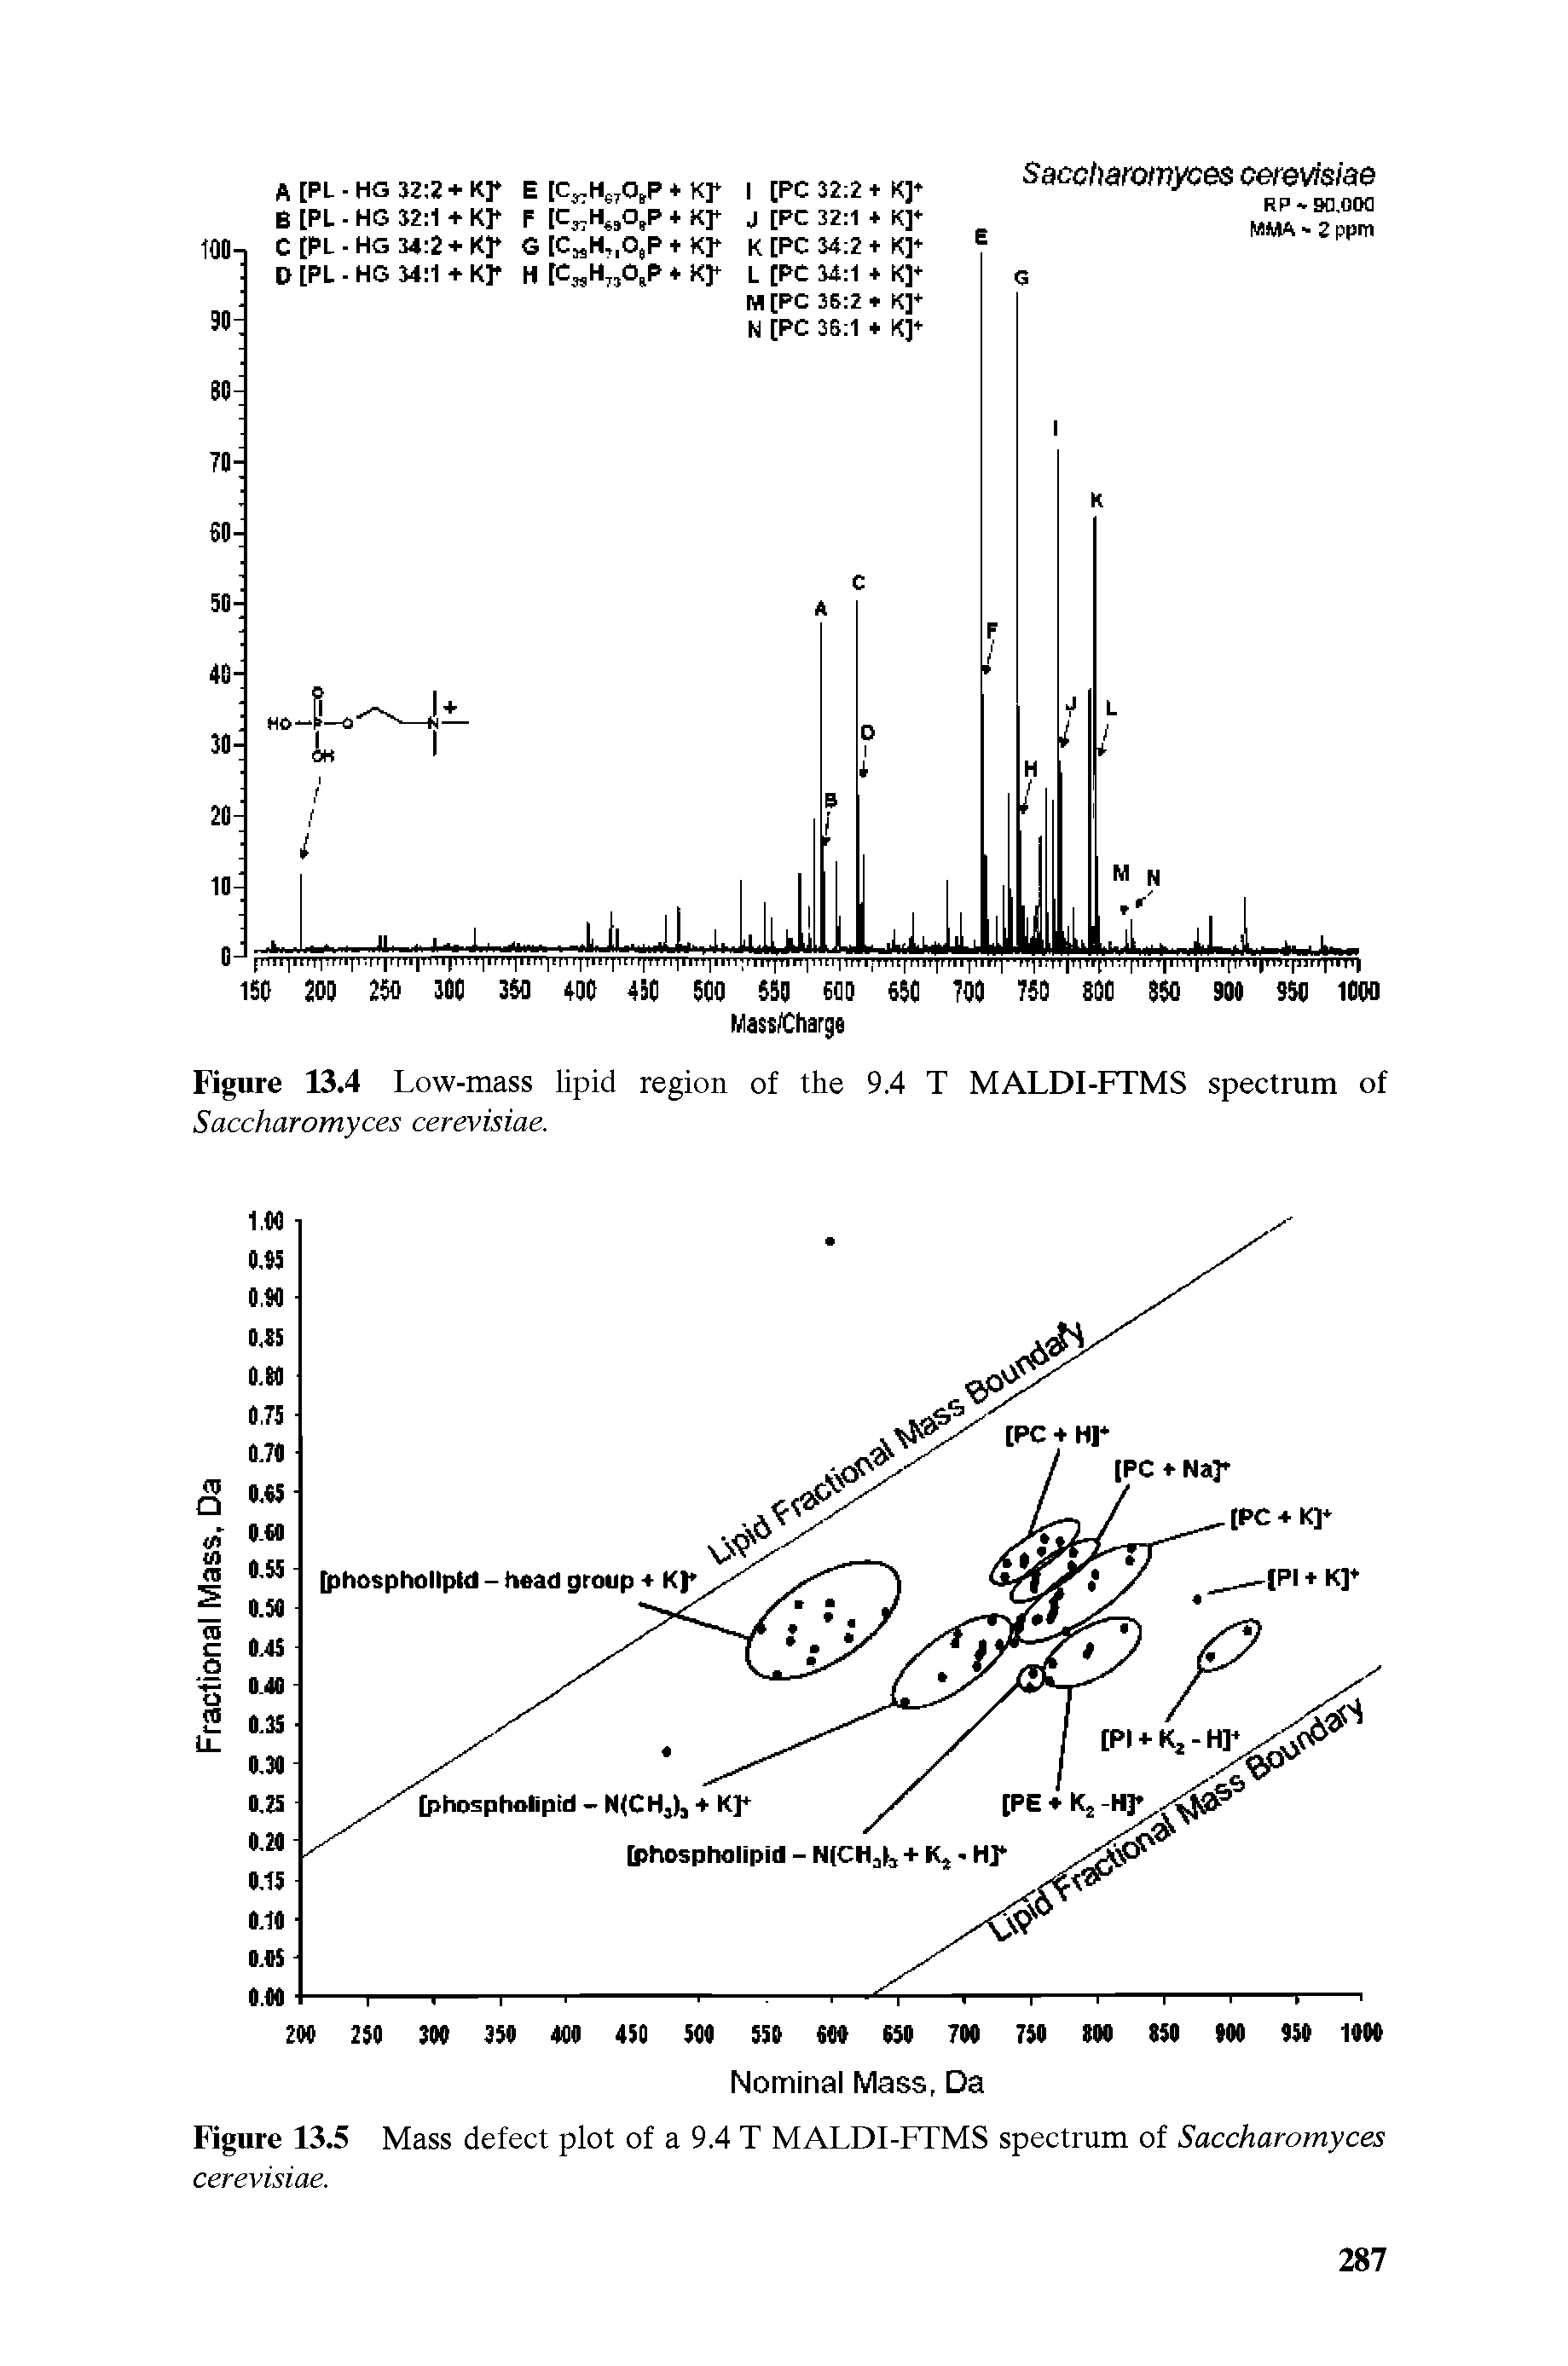 Figure 13.5 Mass defect plot of a 9.4 T MALDI-FTMS spectrum of Saccharomyces cerevisiae.